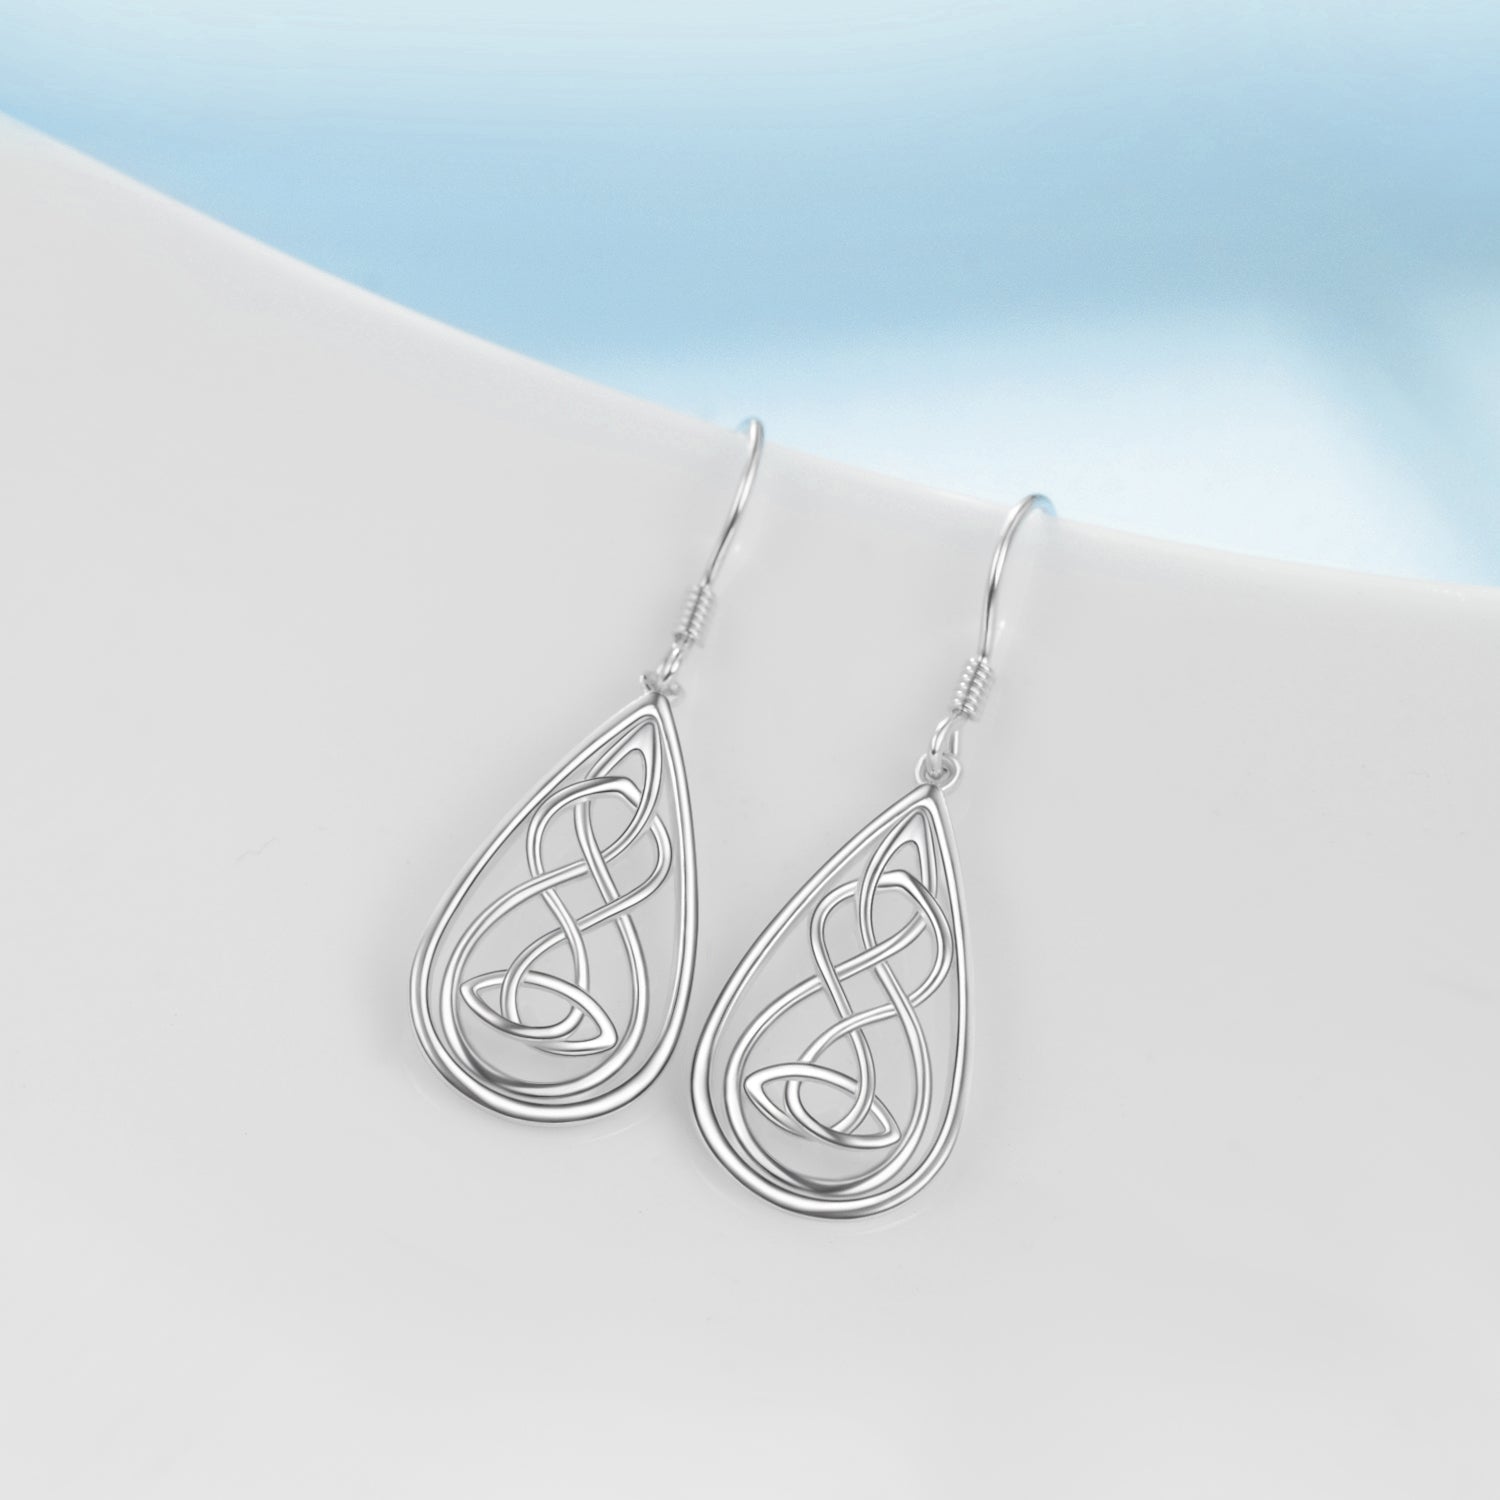 Celtic Knot Dangle Drop Earrings Good Quality Jewelry Design Women